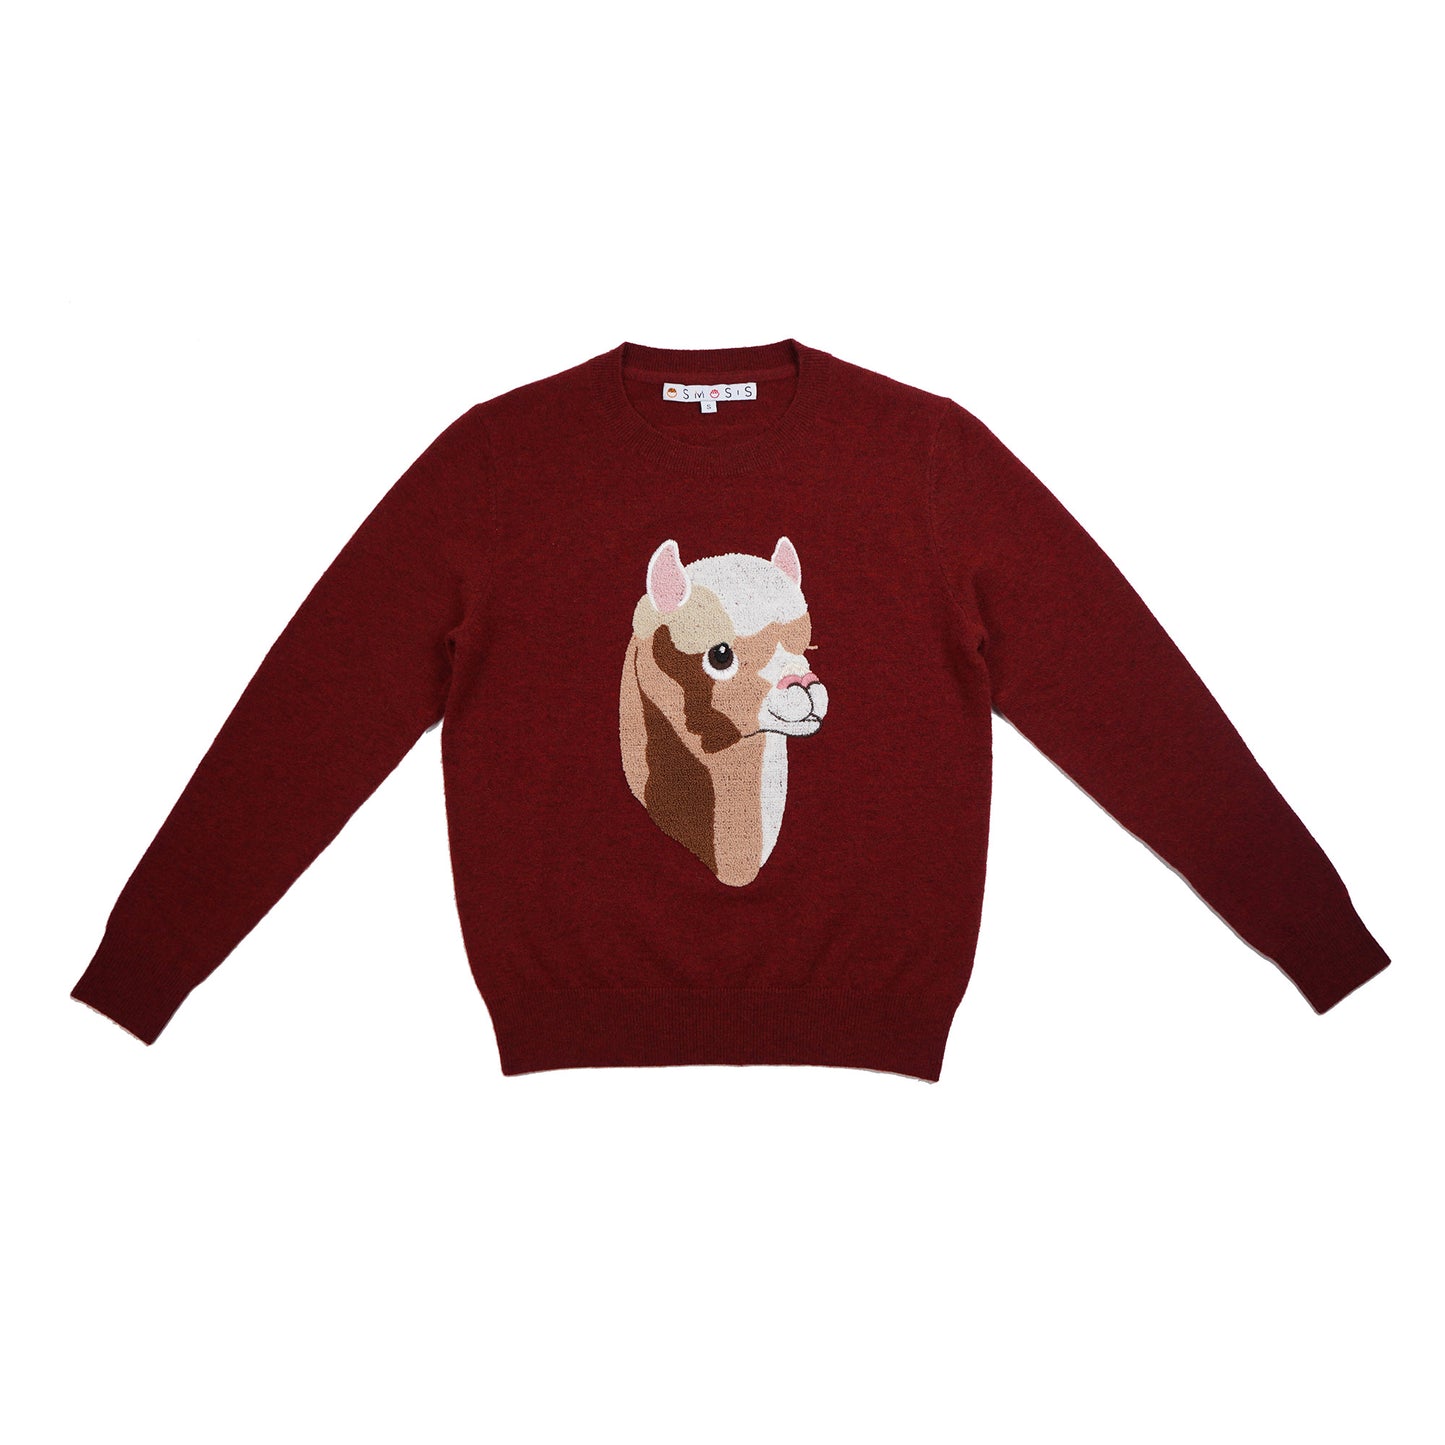 Sleepy alpaca wool pullover